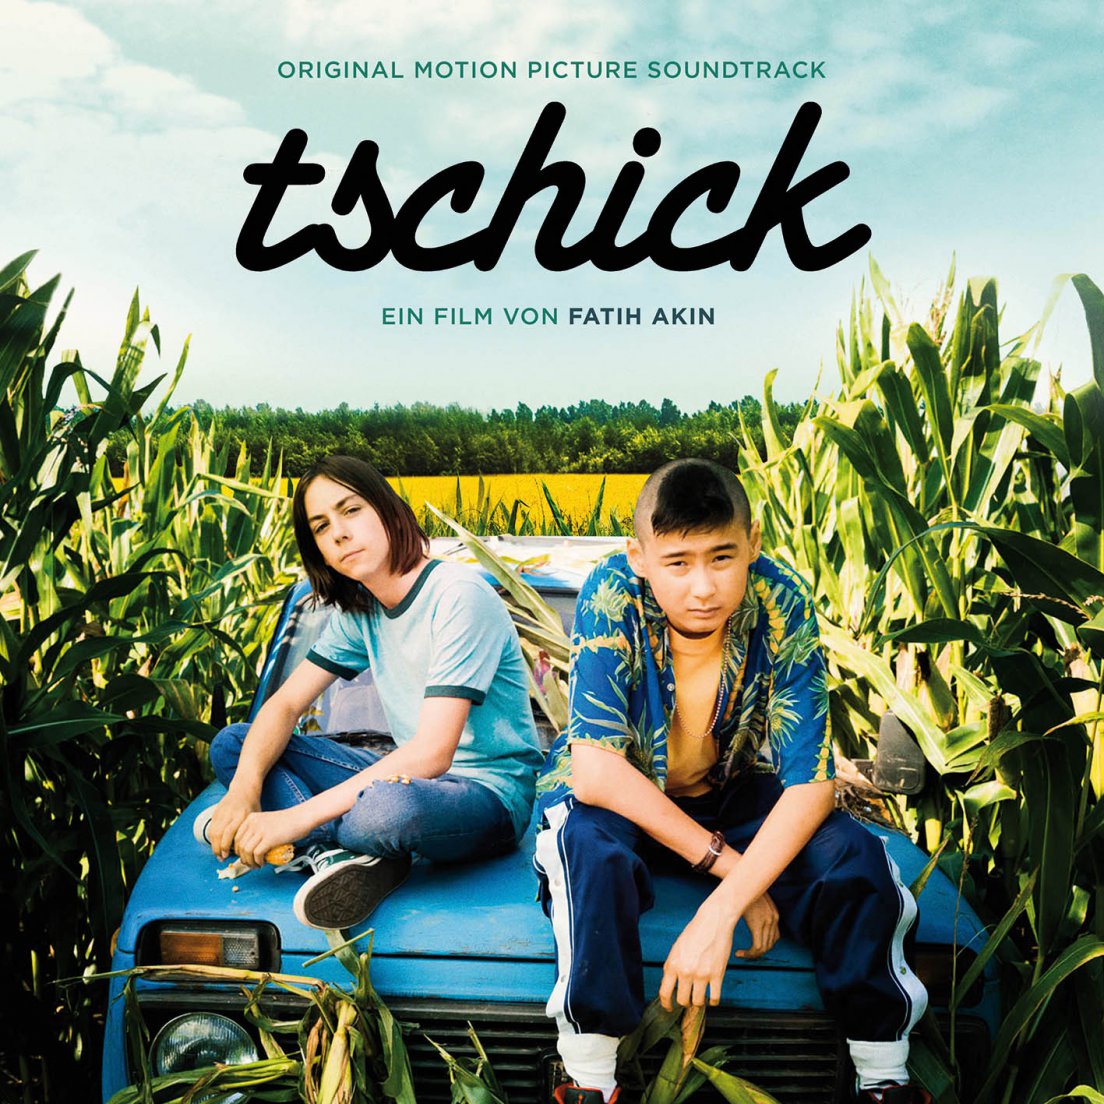 Tschick Film Stream